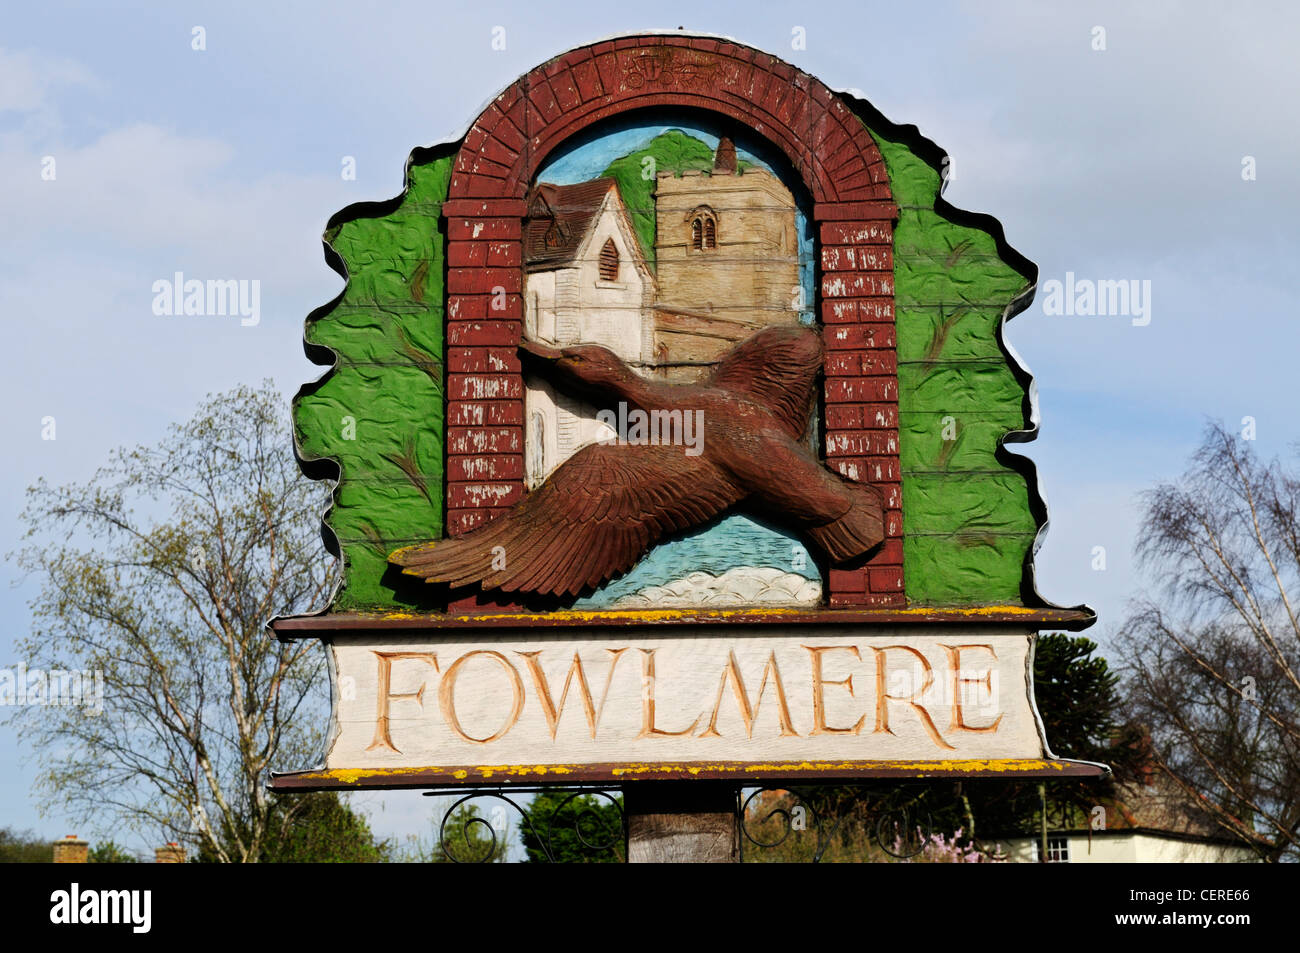 Fowlmere village sign. Stock Photo